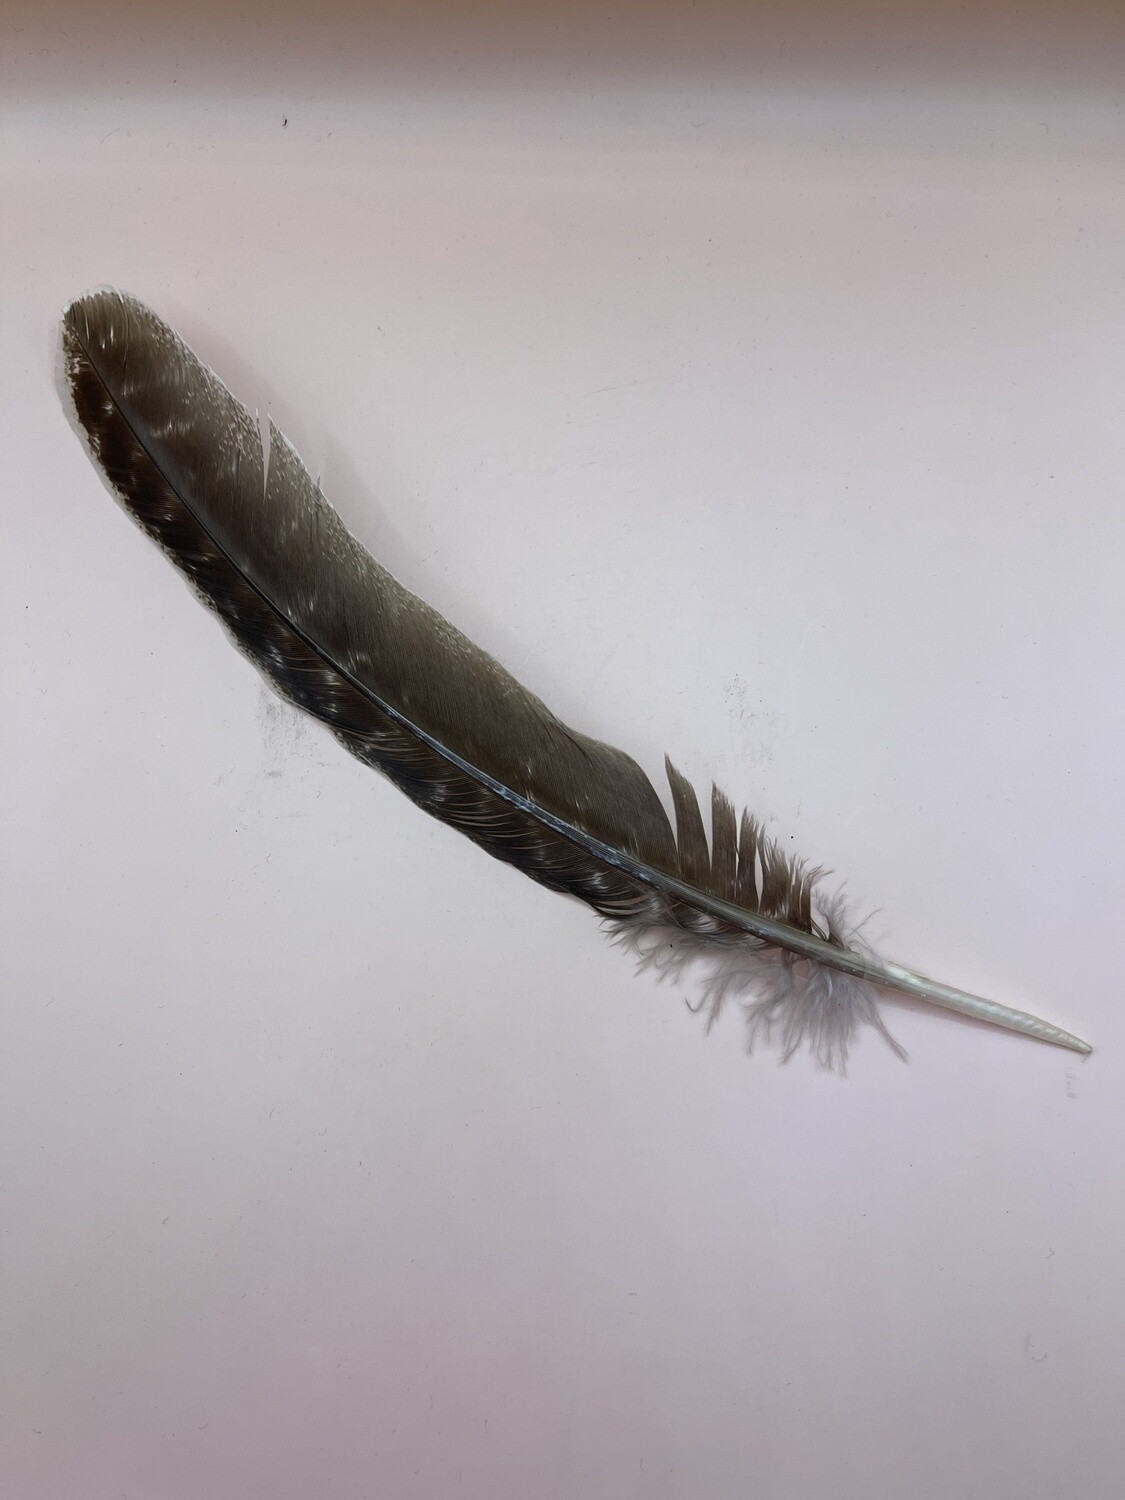 Barred Turkey Feather